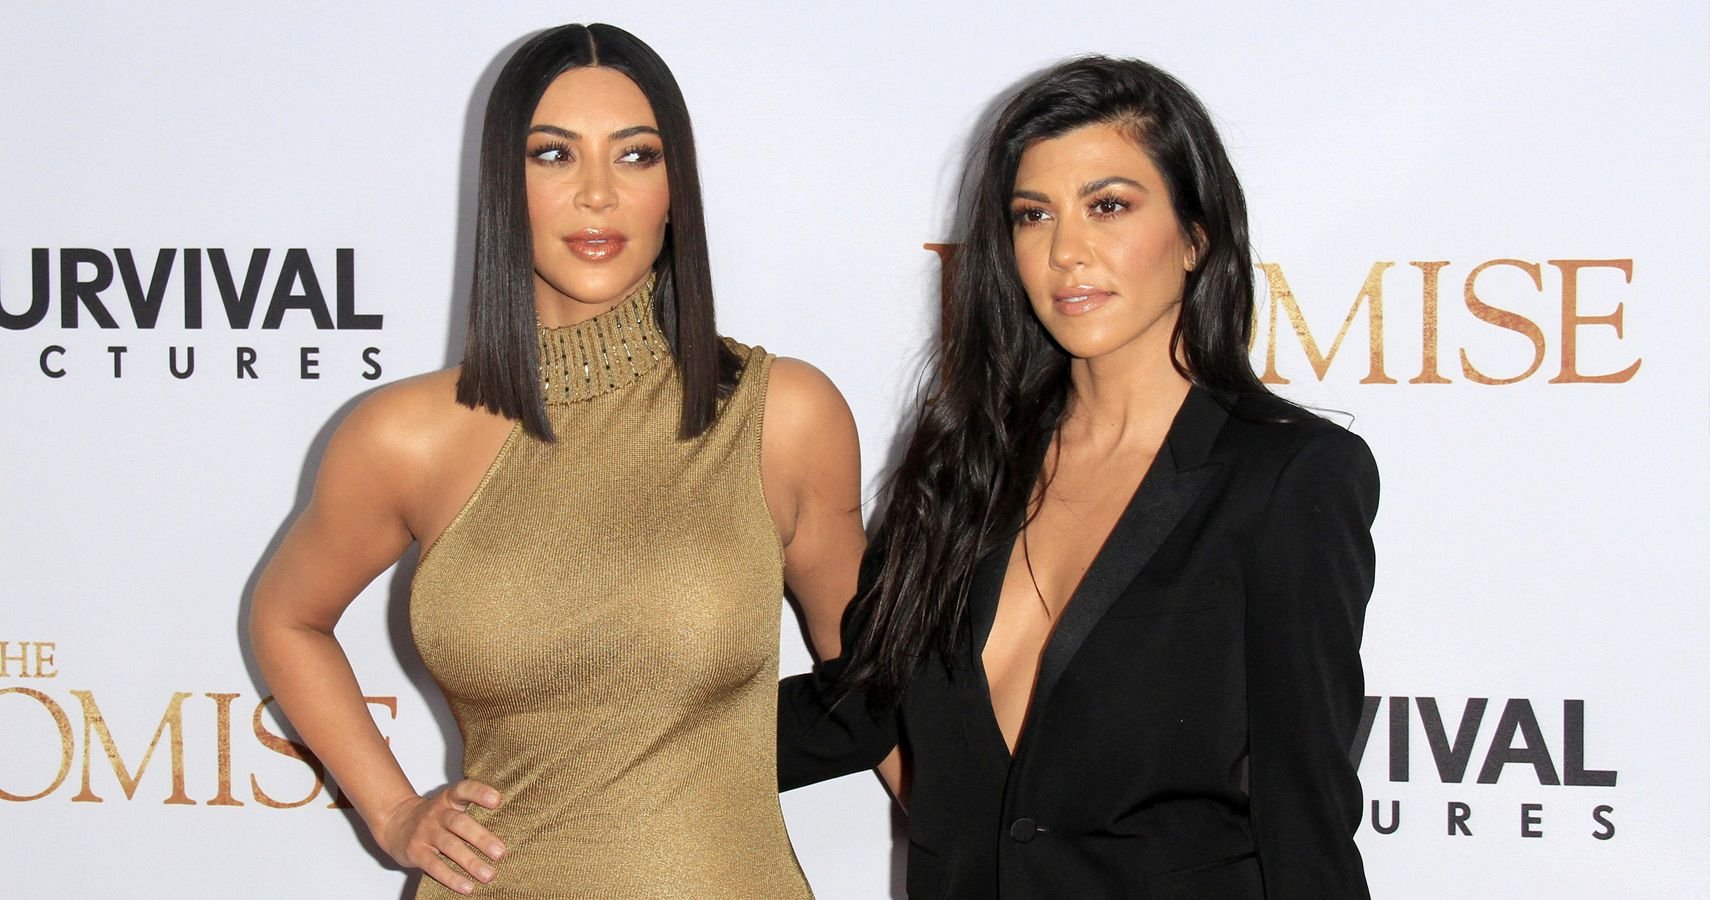 Kourtney Kardashian Quietly Makes Millions While Her Sisters Take The Spotlight